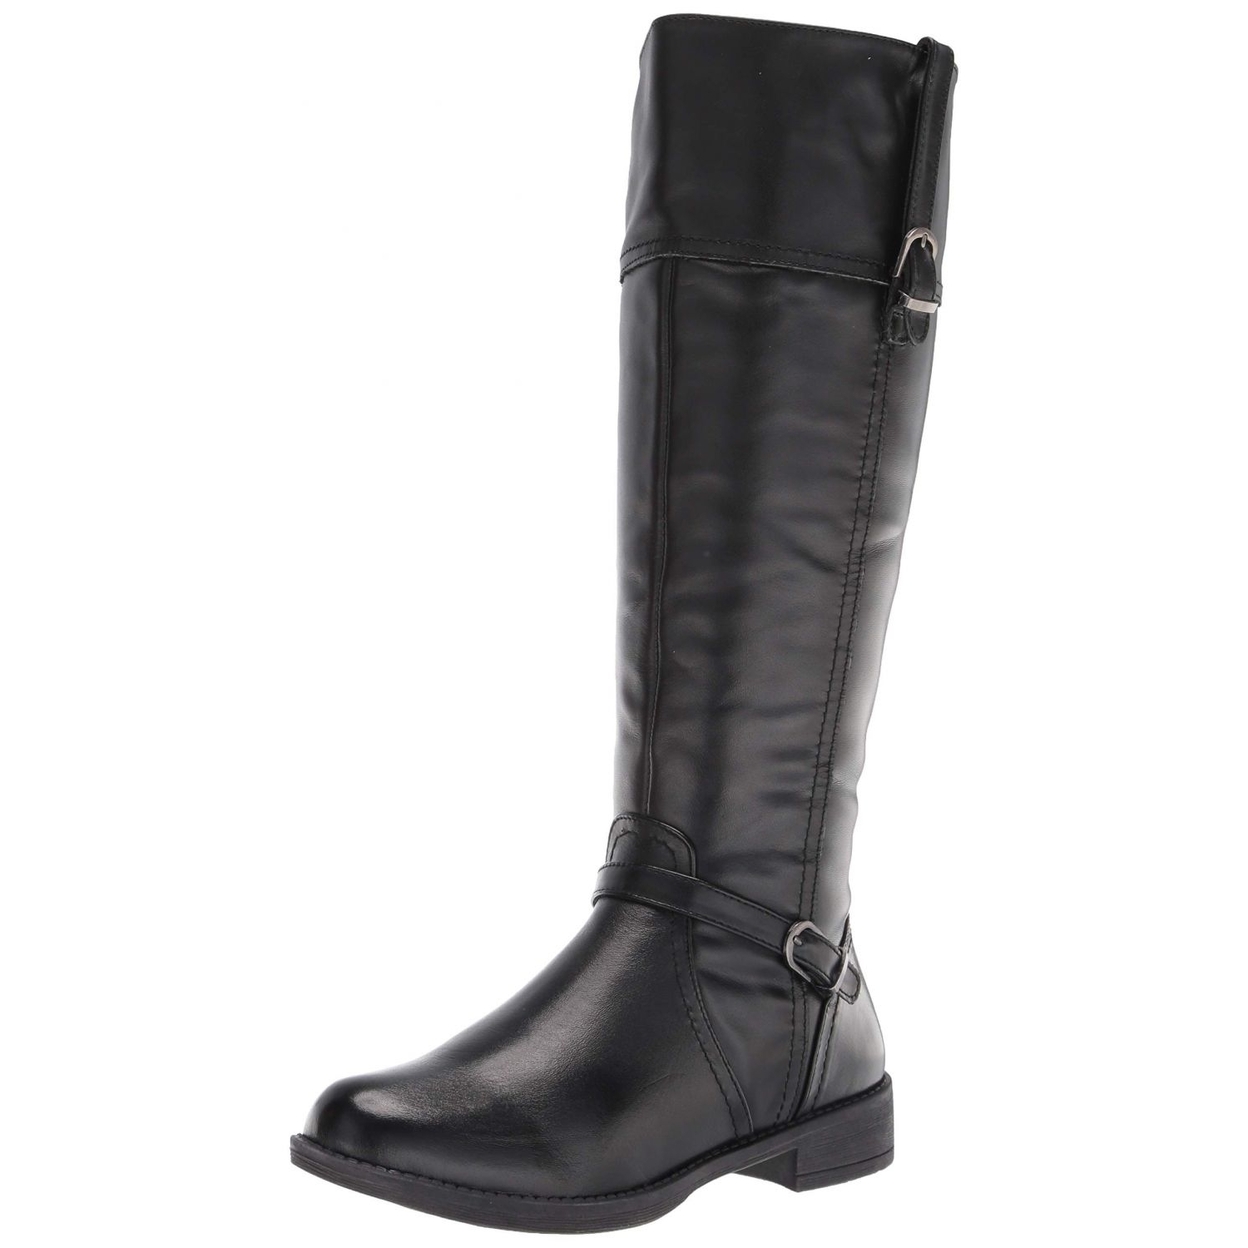 Propet Womens Tasha Zippered Casual Boots Knee High Low Heel 1-2 - Black BROWN - BROWN, 6.5